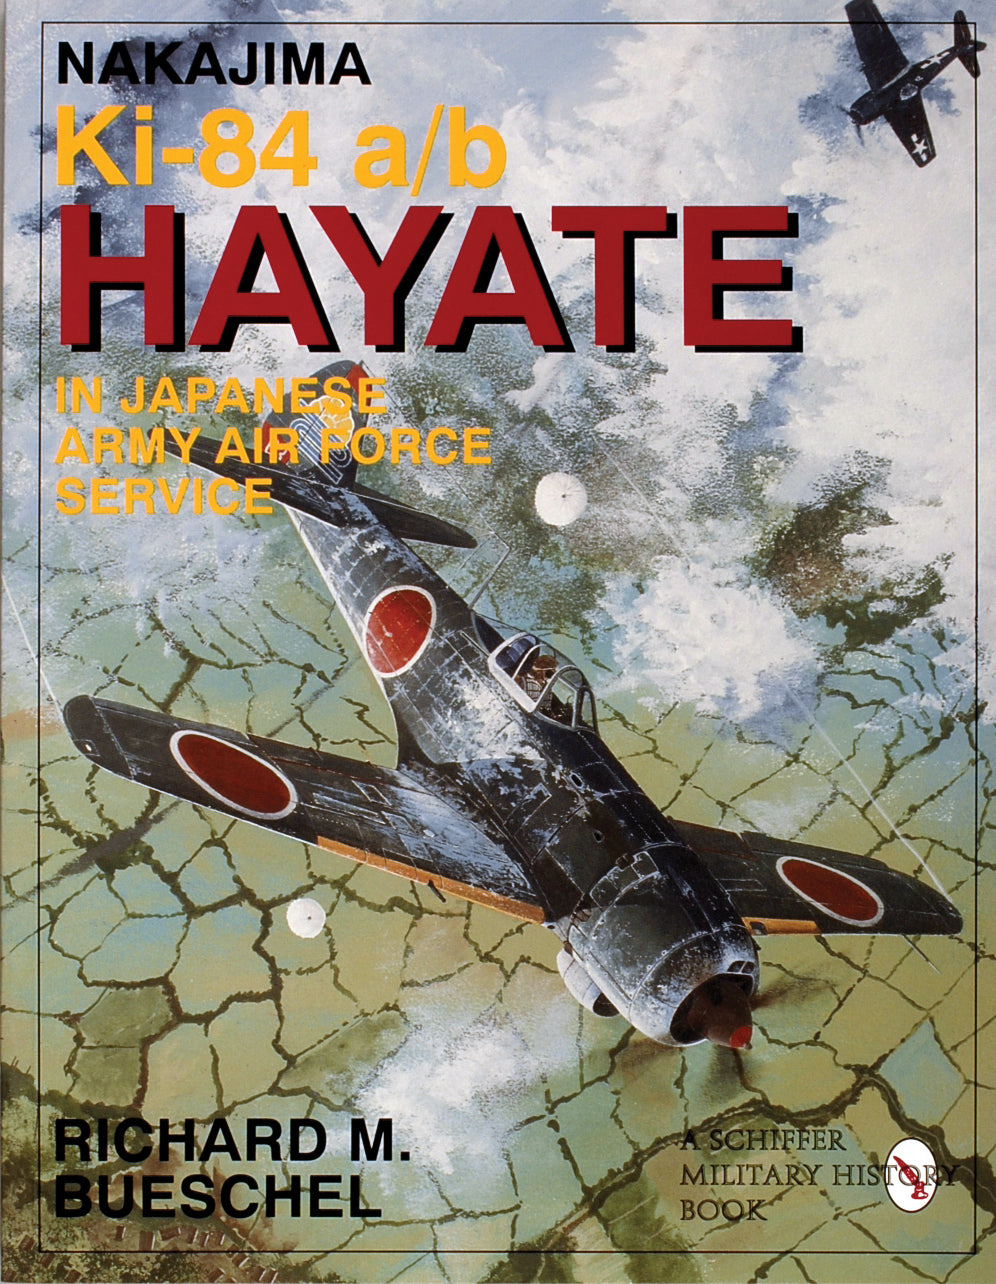 Nakajima Ki-84 a/b Hayate in Japanese Army Air Force Service